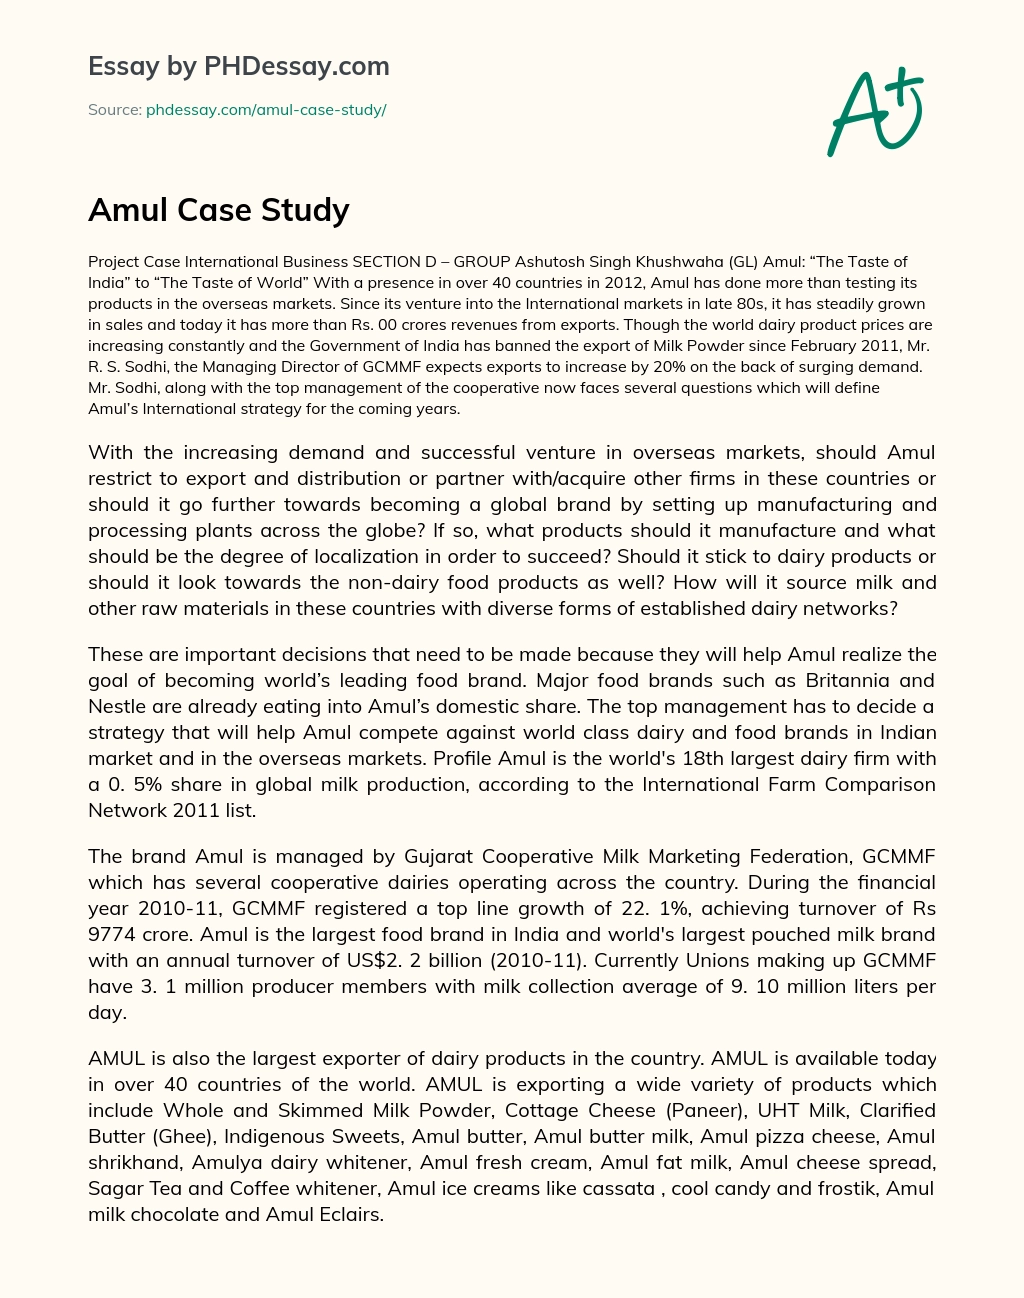 Amul Case Study essay